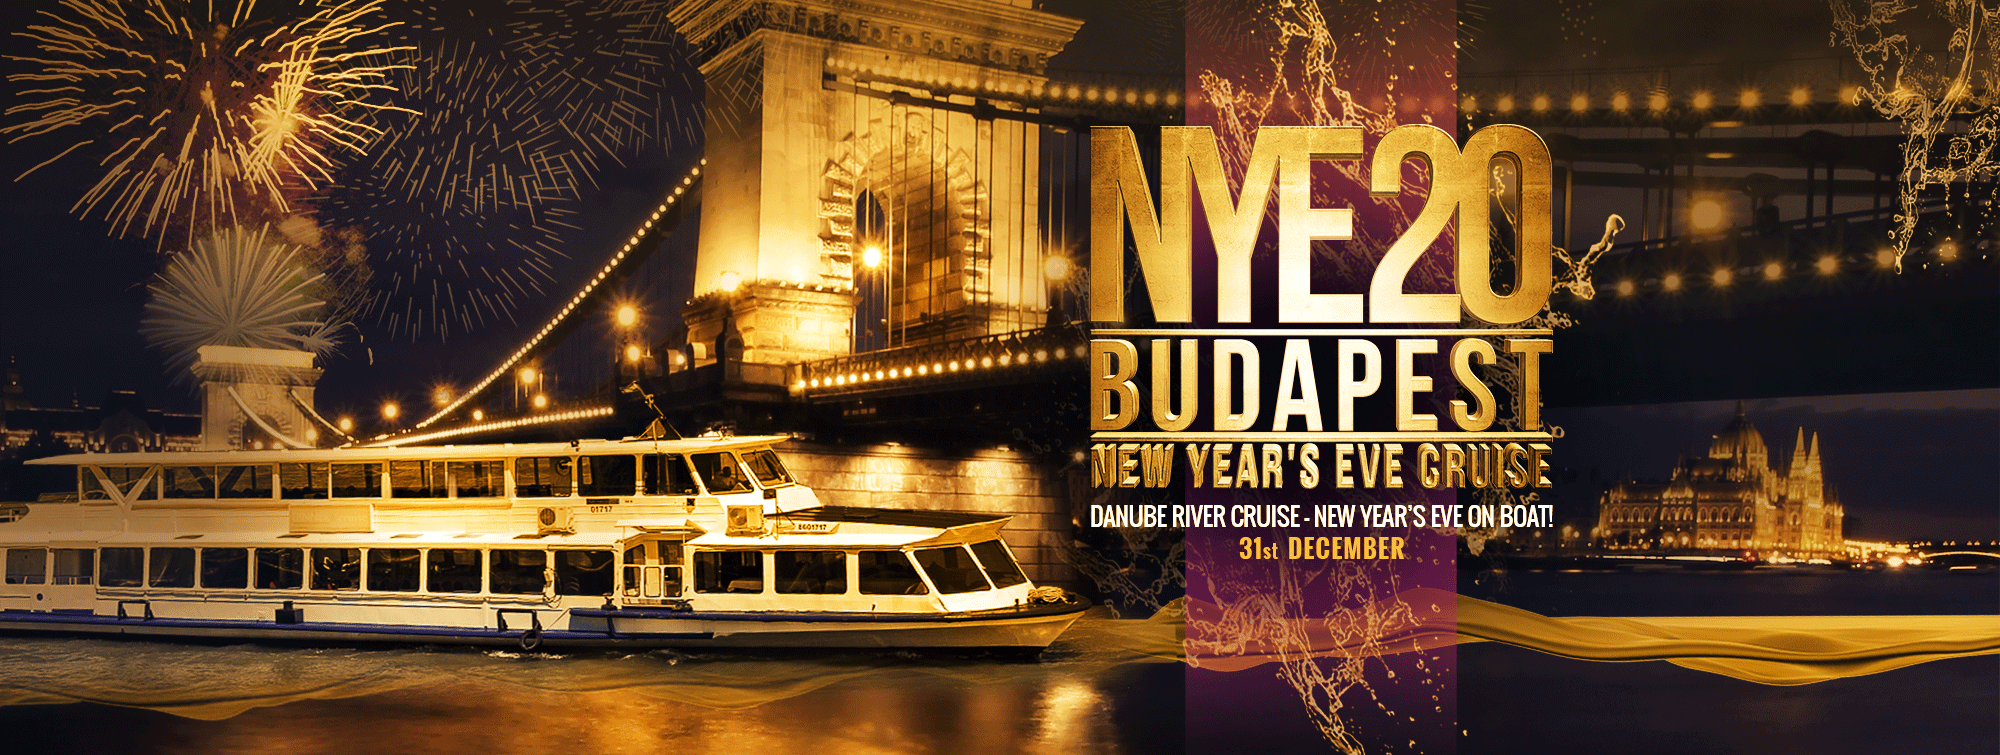 Budapest new year's cruise